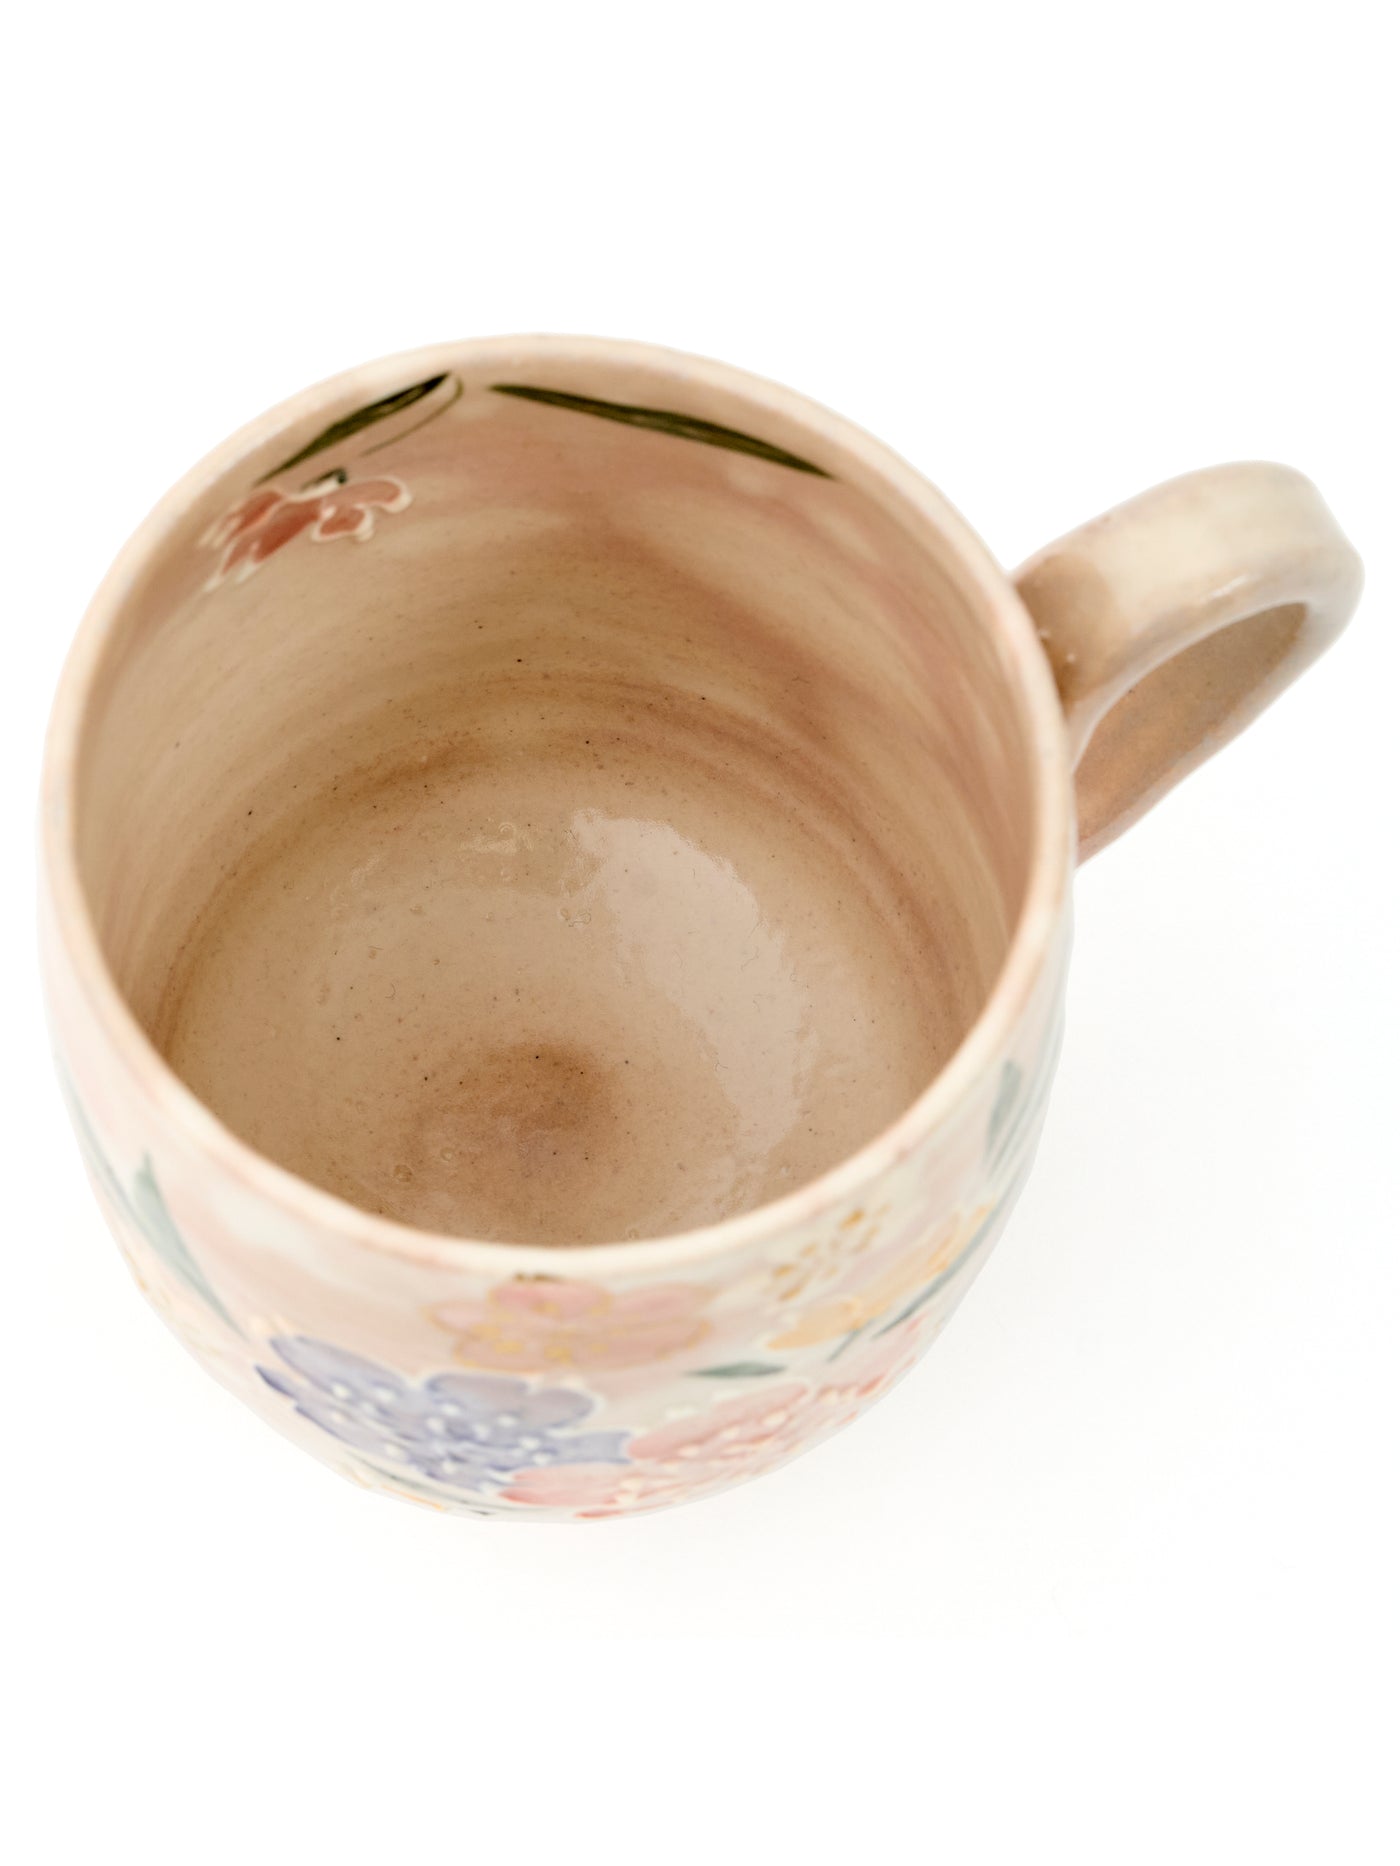 Sakura Kyoto Ware Coffee Mug by Kitaya